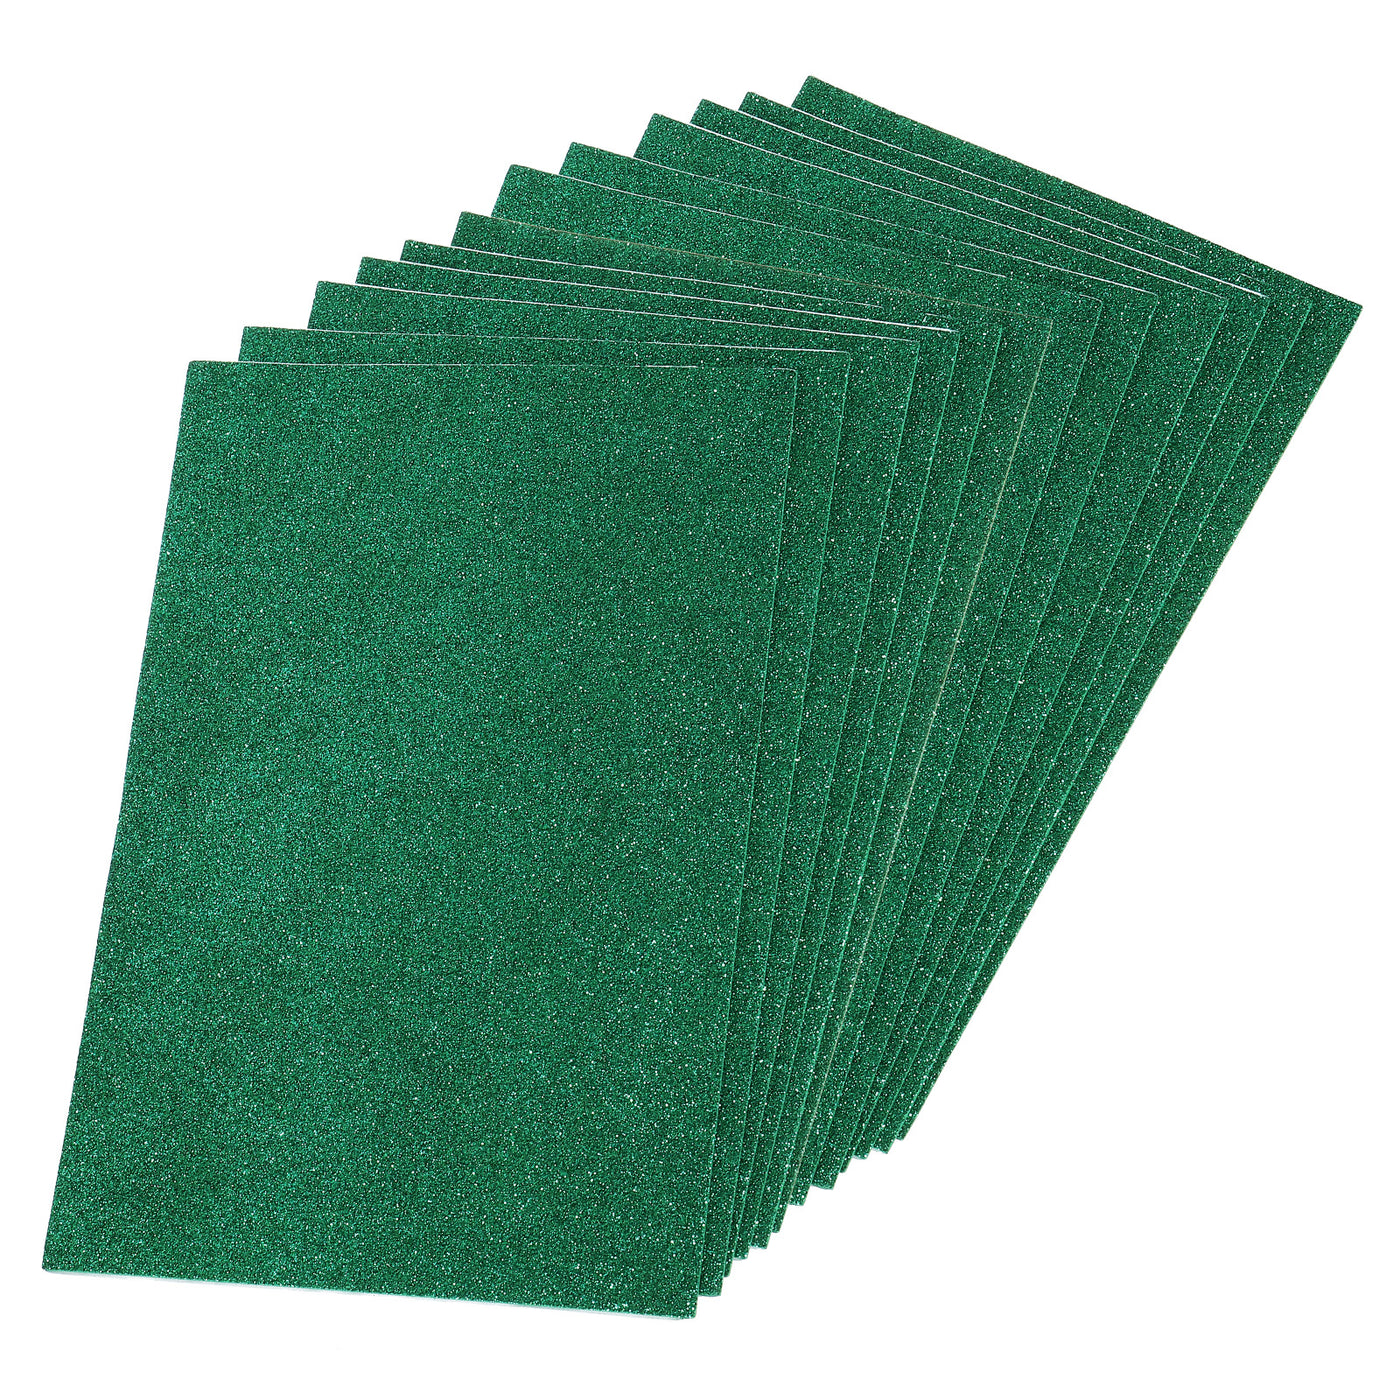 Harfington Glitter EVA Foam Sheets Soft Paper Self-Adhesive 11.8 x 7.8 Inch Green 12 Pcs